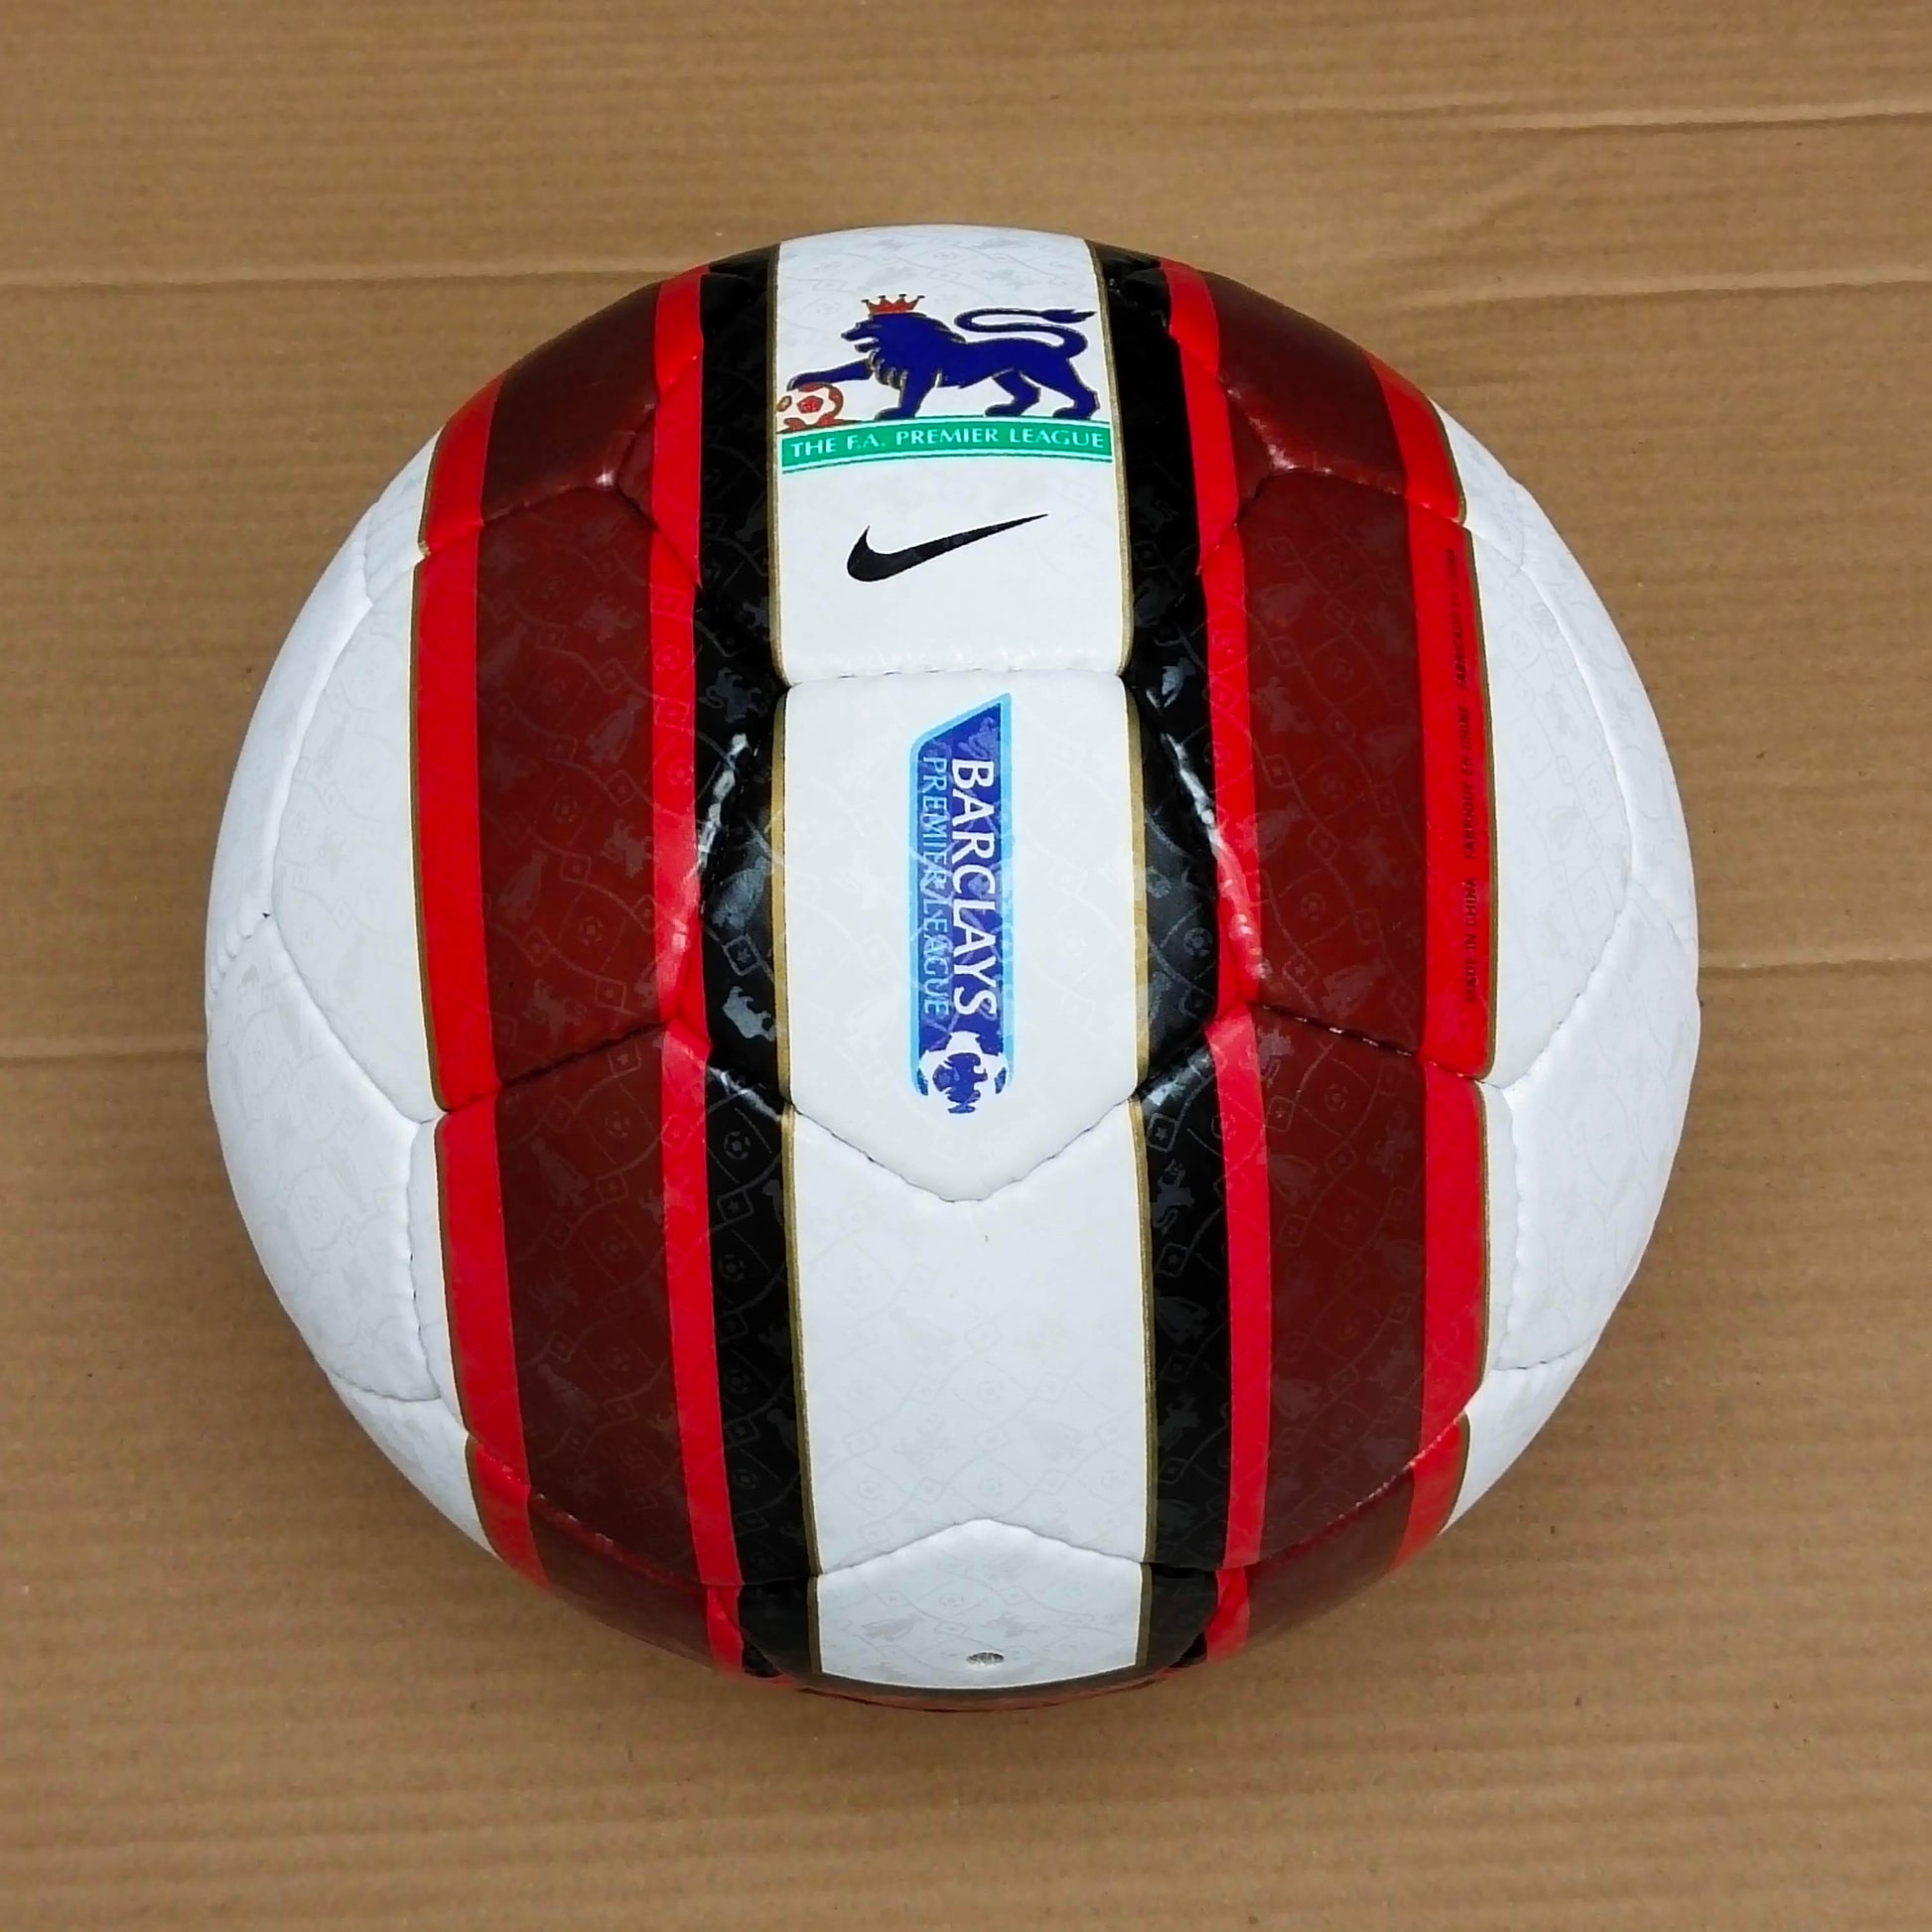 Nike Total 90 Aerow II | The FA Premier League Barclays | 2007-2008 | Size 5 02